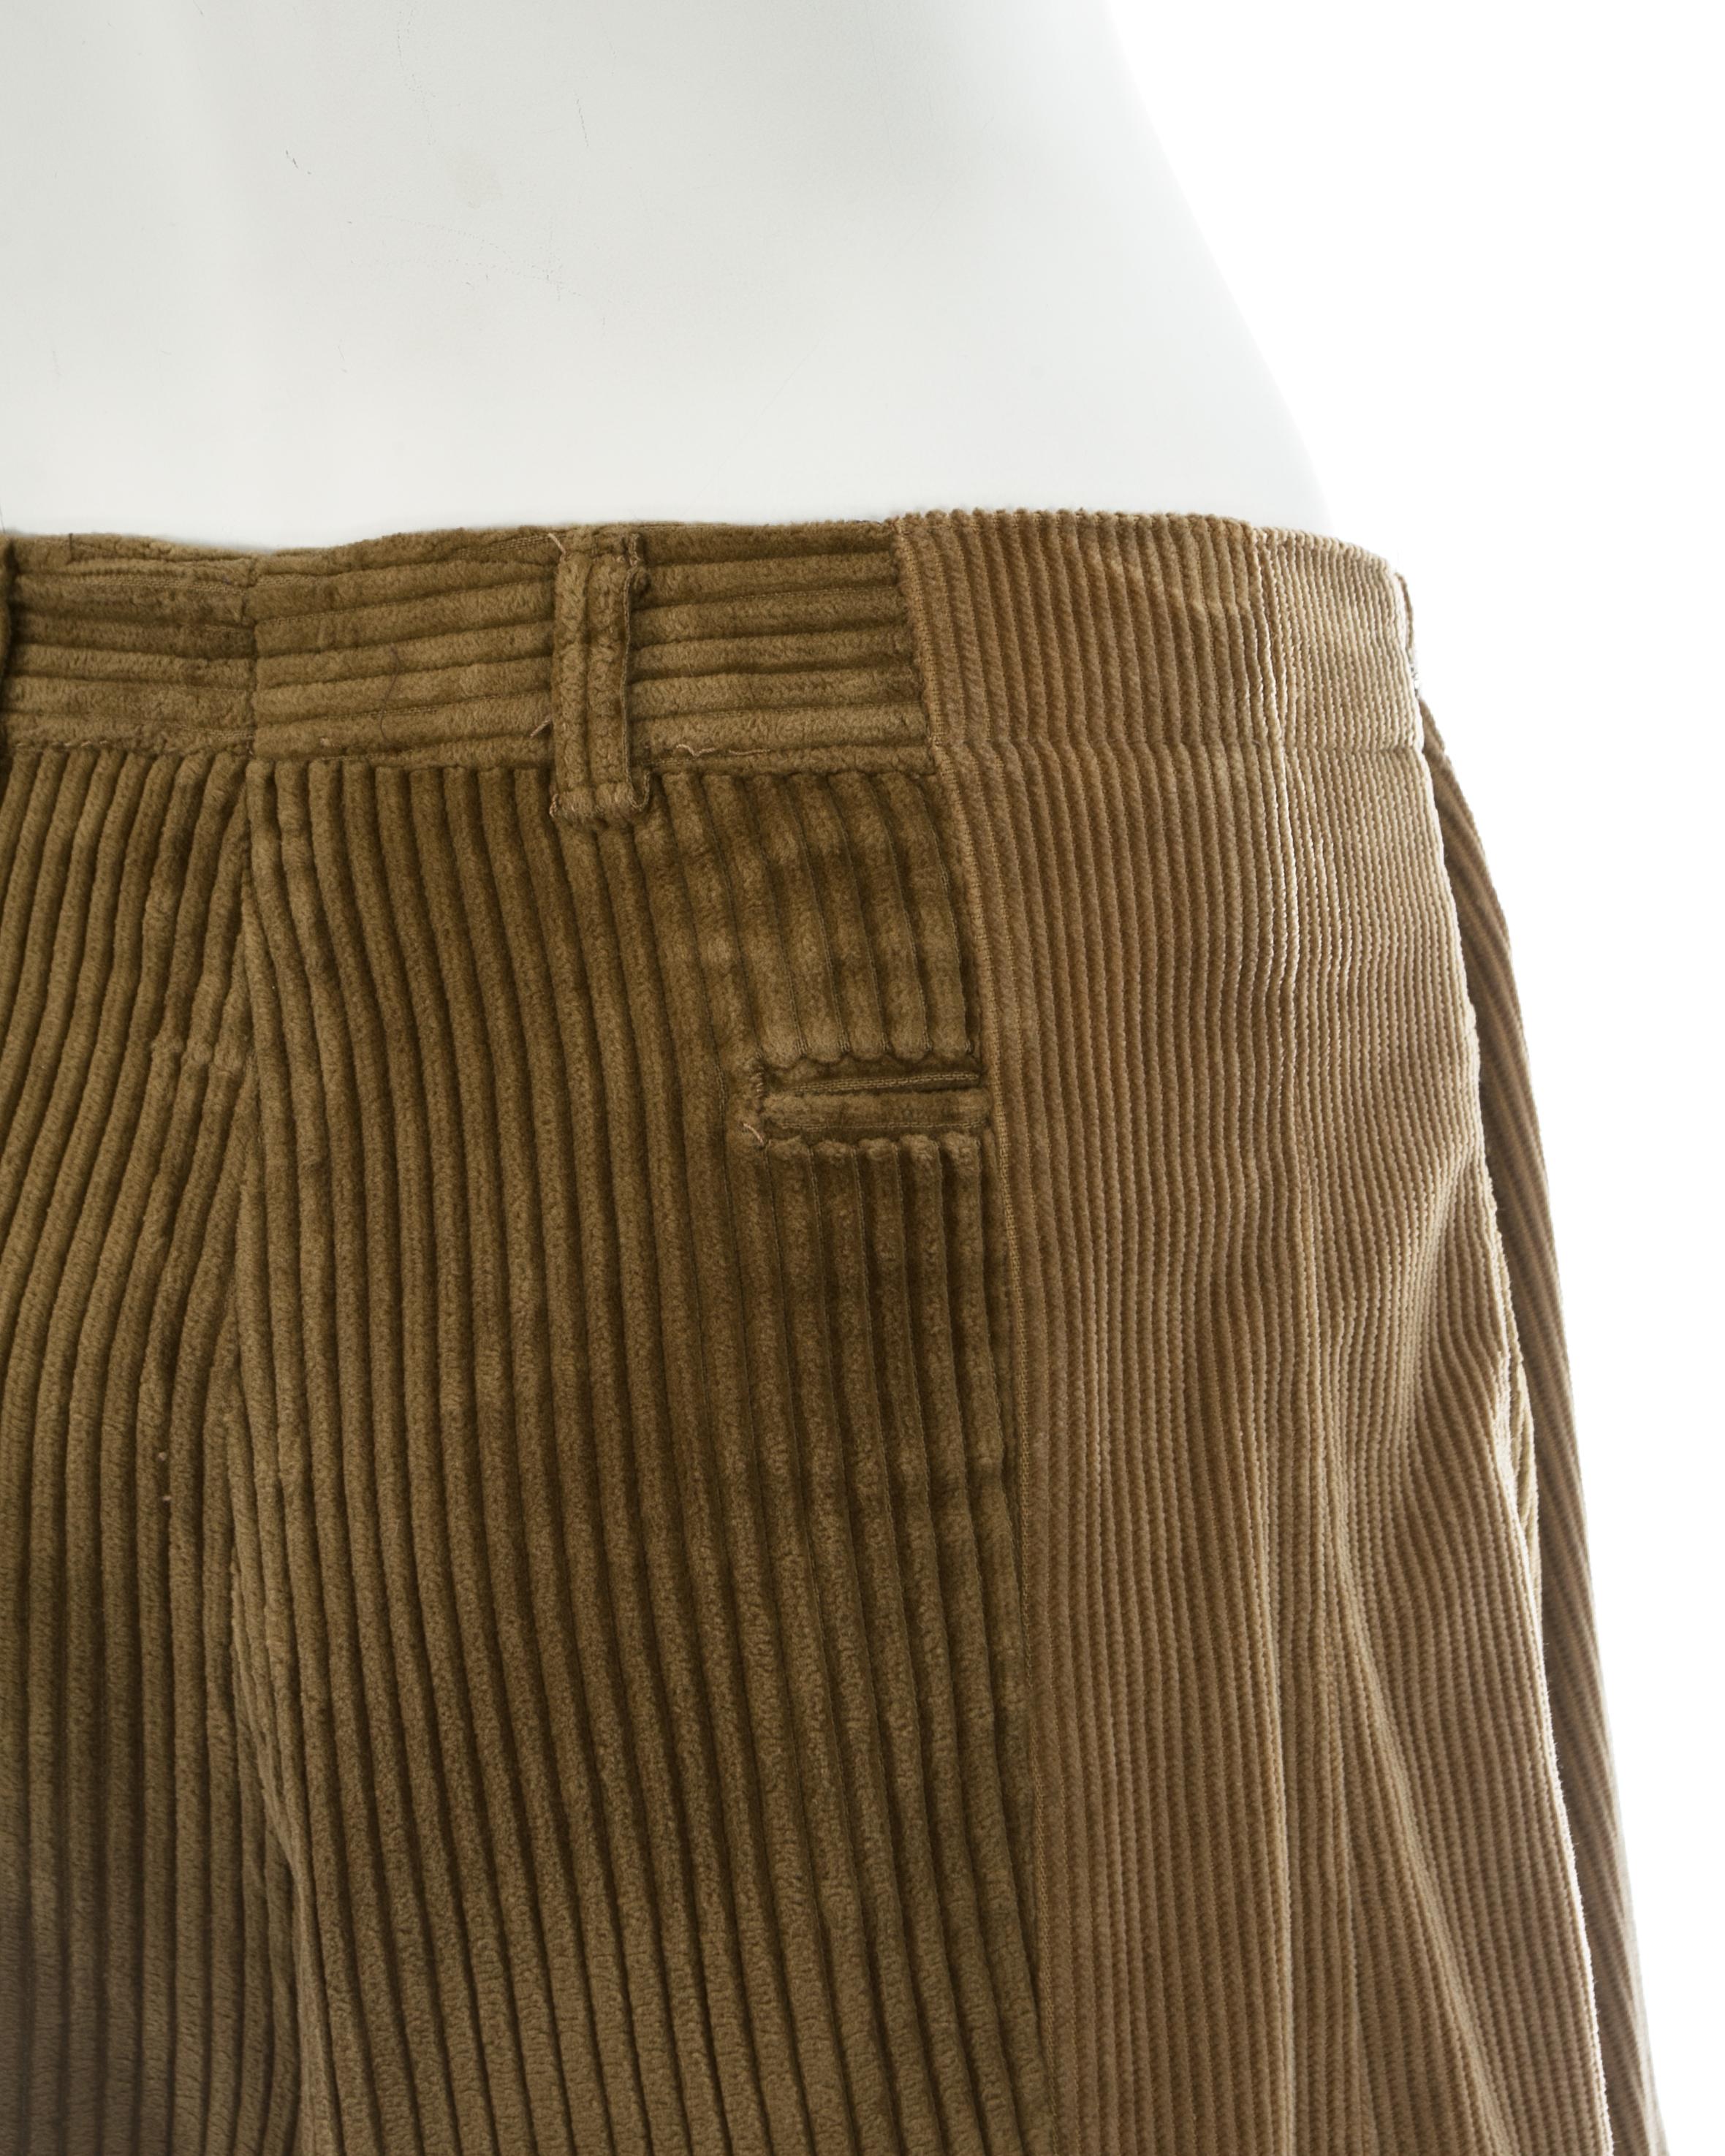 Martin Margiela artisanal tan corduroy reconstructed oversized pants, fw 2000 For Sale 1